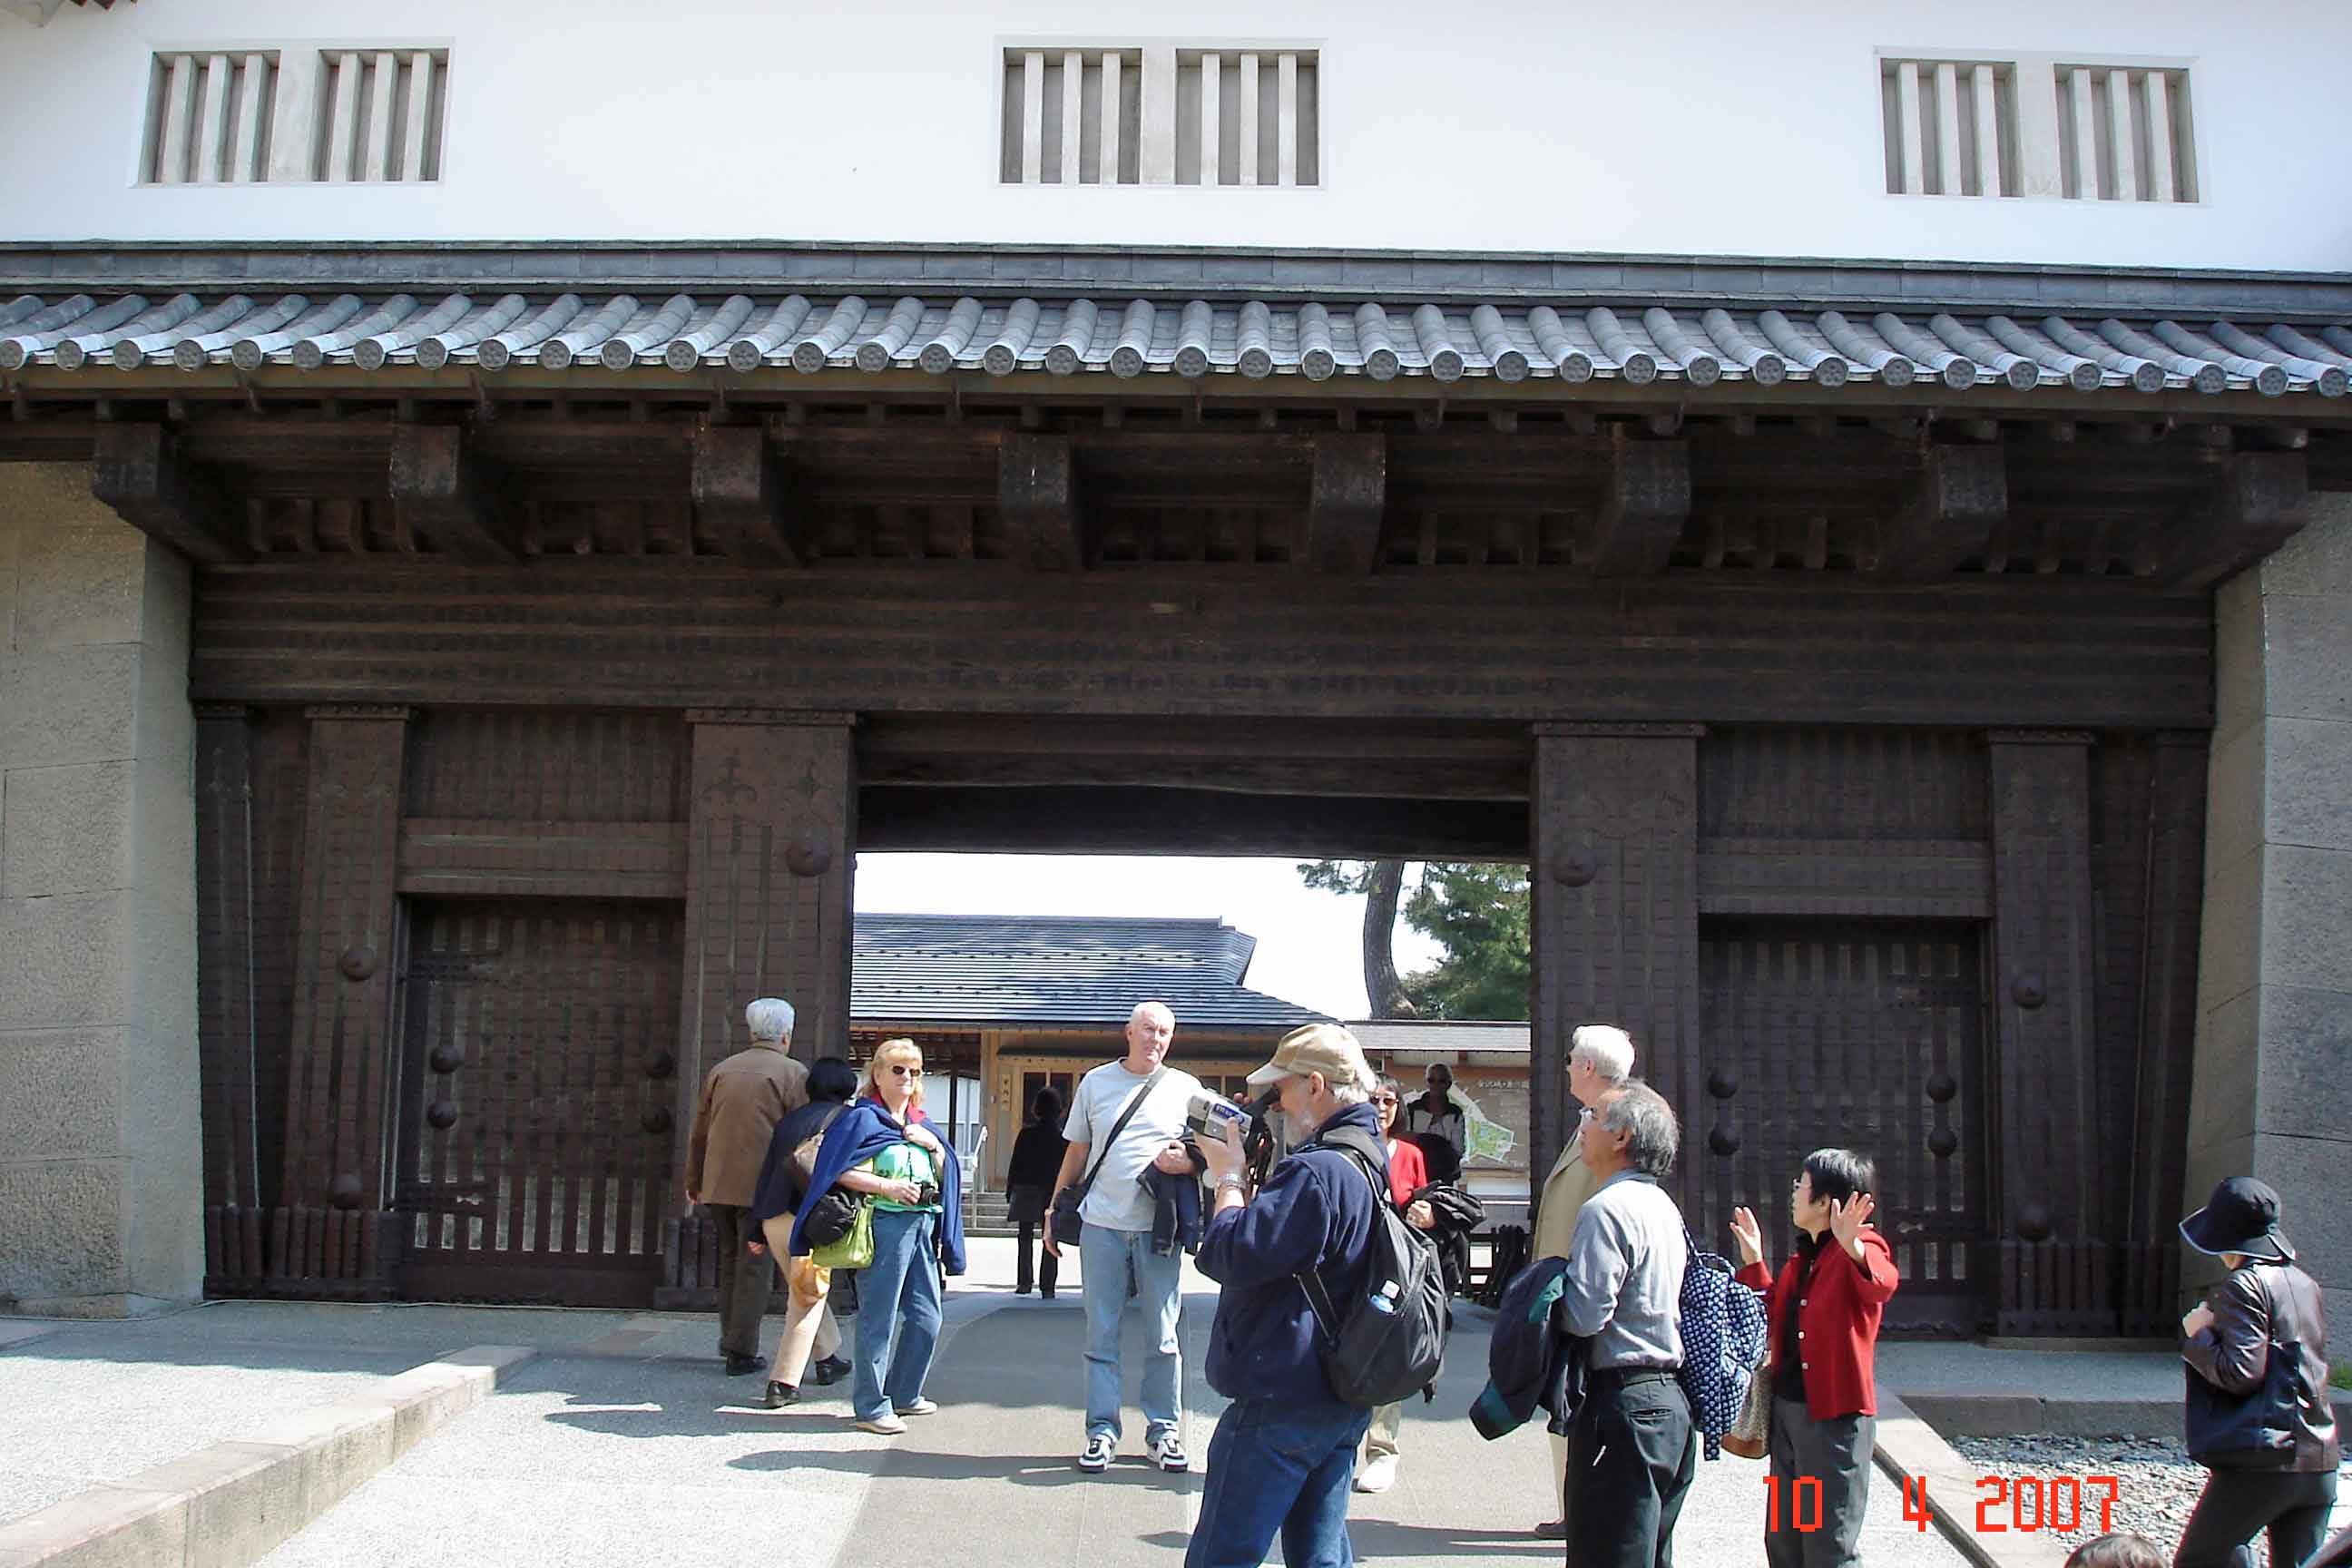  Ishikawamon Gate huge iron gates with inner walls built of stone.